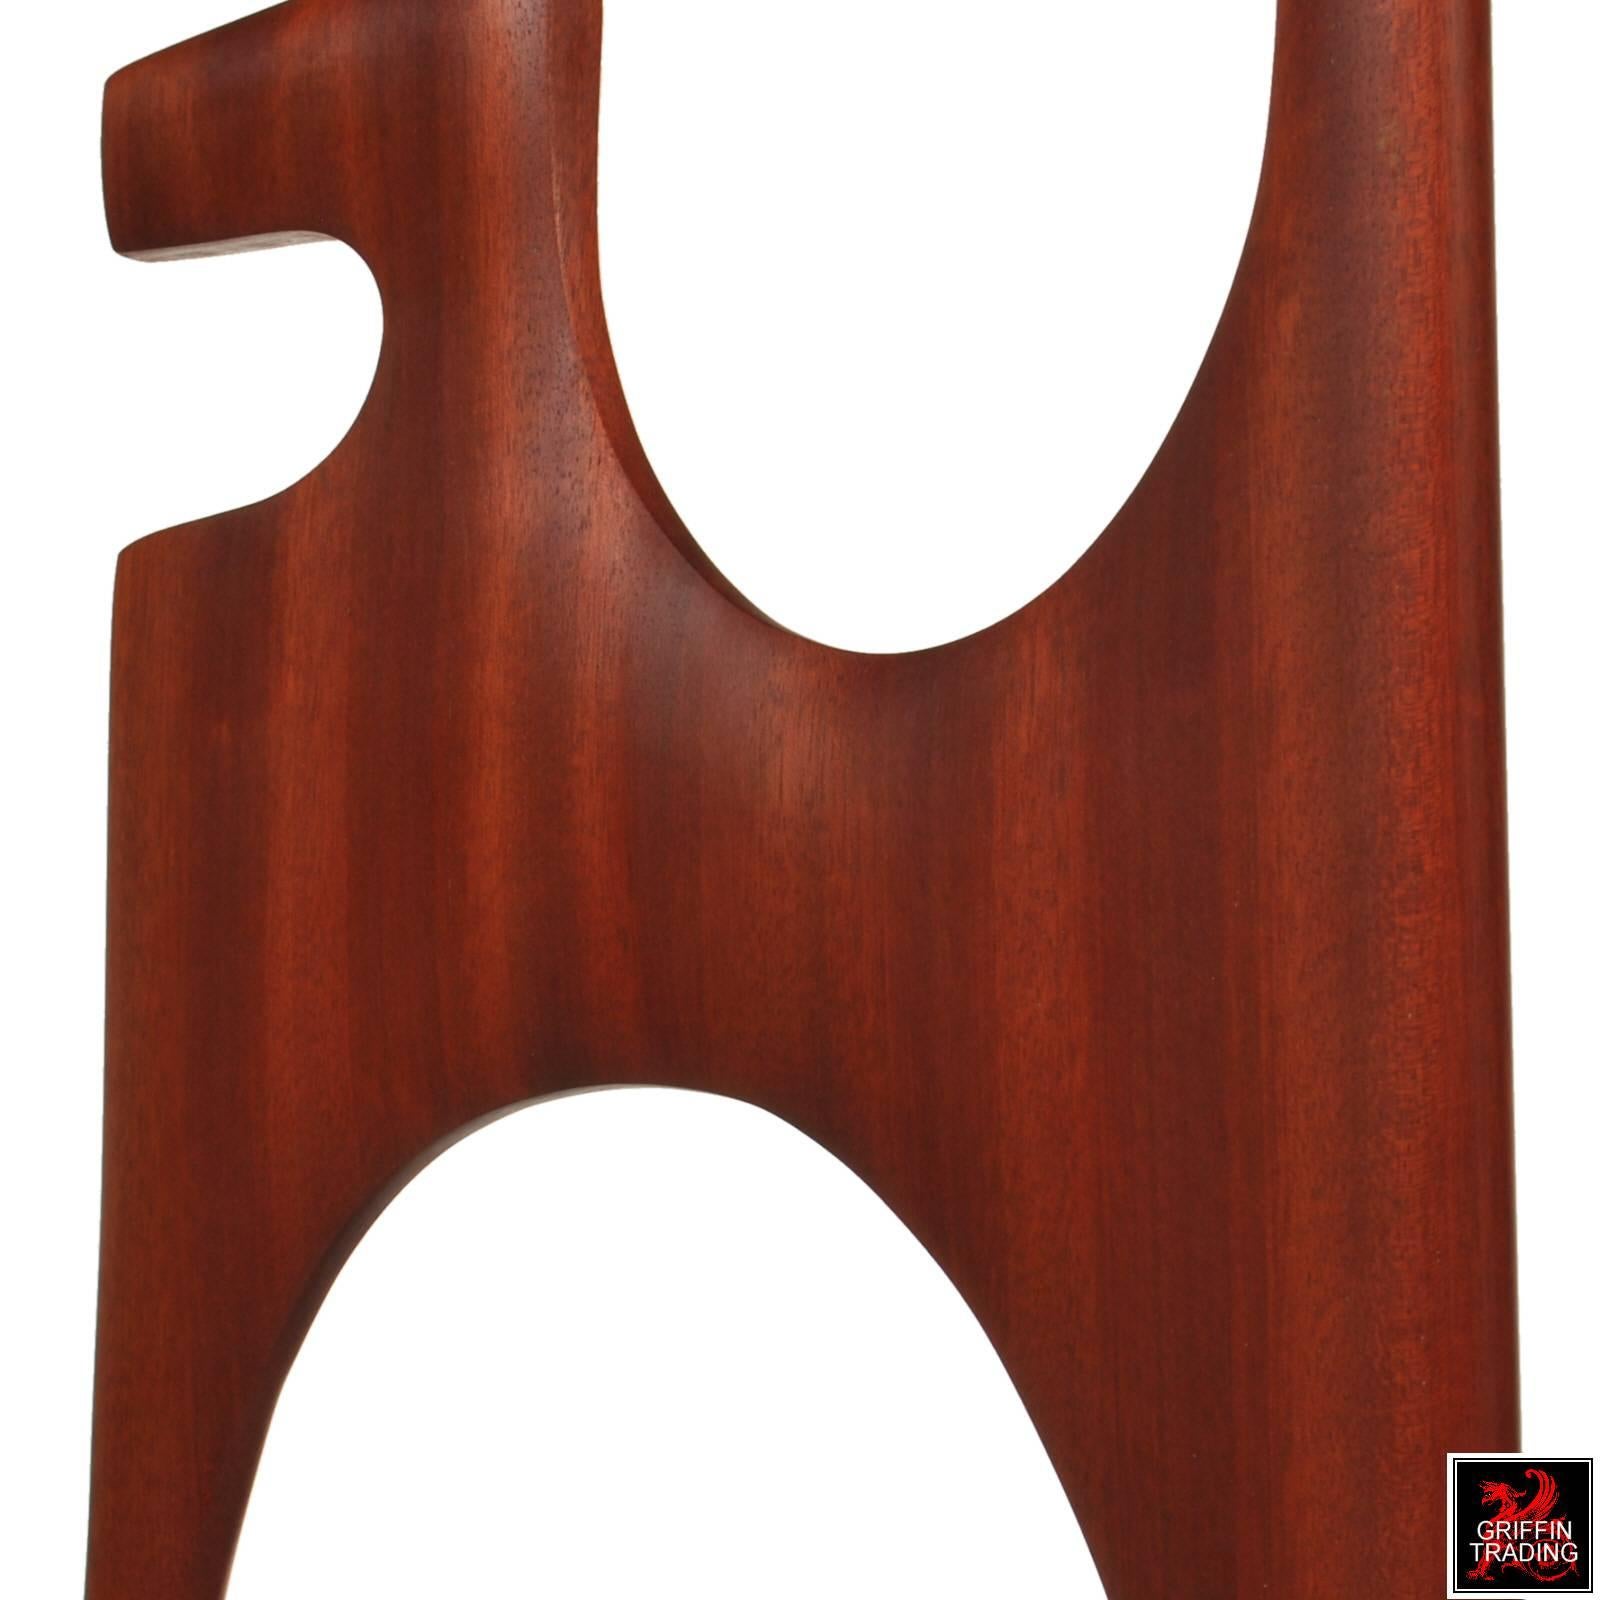 Steel DRH16 Modern Dog Wood Sculpture, Mid-Century Modern Style For Sale